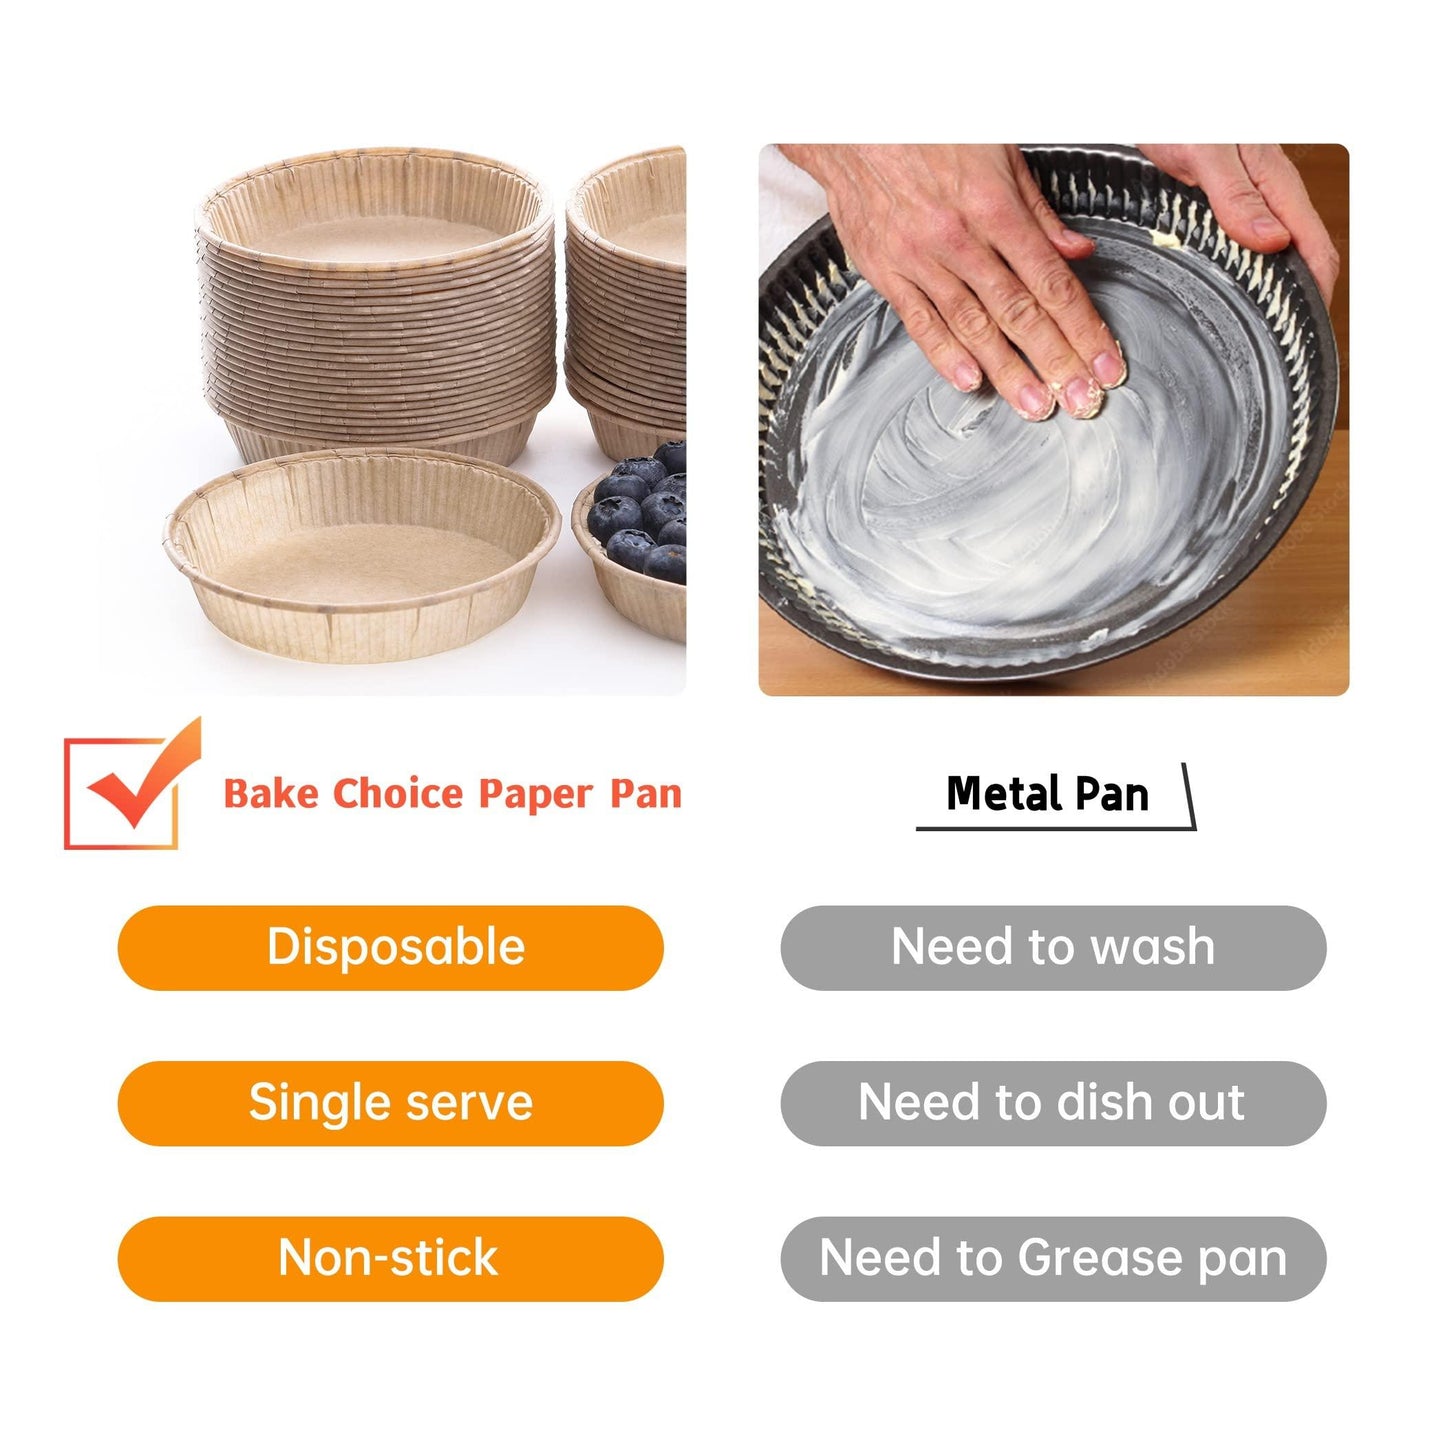 Bake Choice 50pcs Paper Mini Tart Pans for Baking, mini pie tins 4Inch Mini Pie Pans, Non-stick, Disposable Quiche Baking Dish,Oven safe, Microwave safe - CookCave